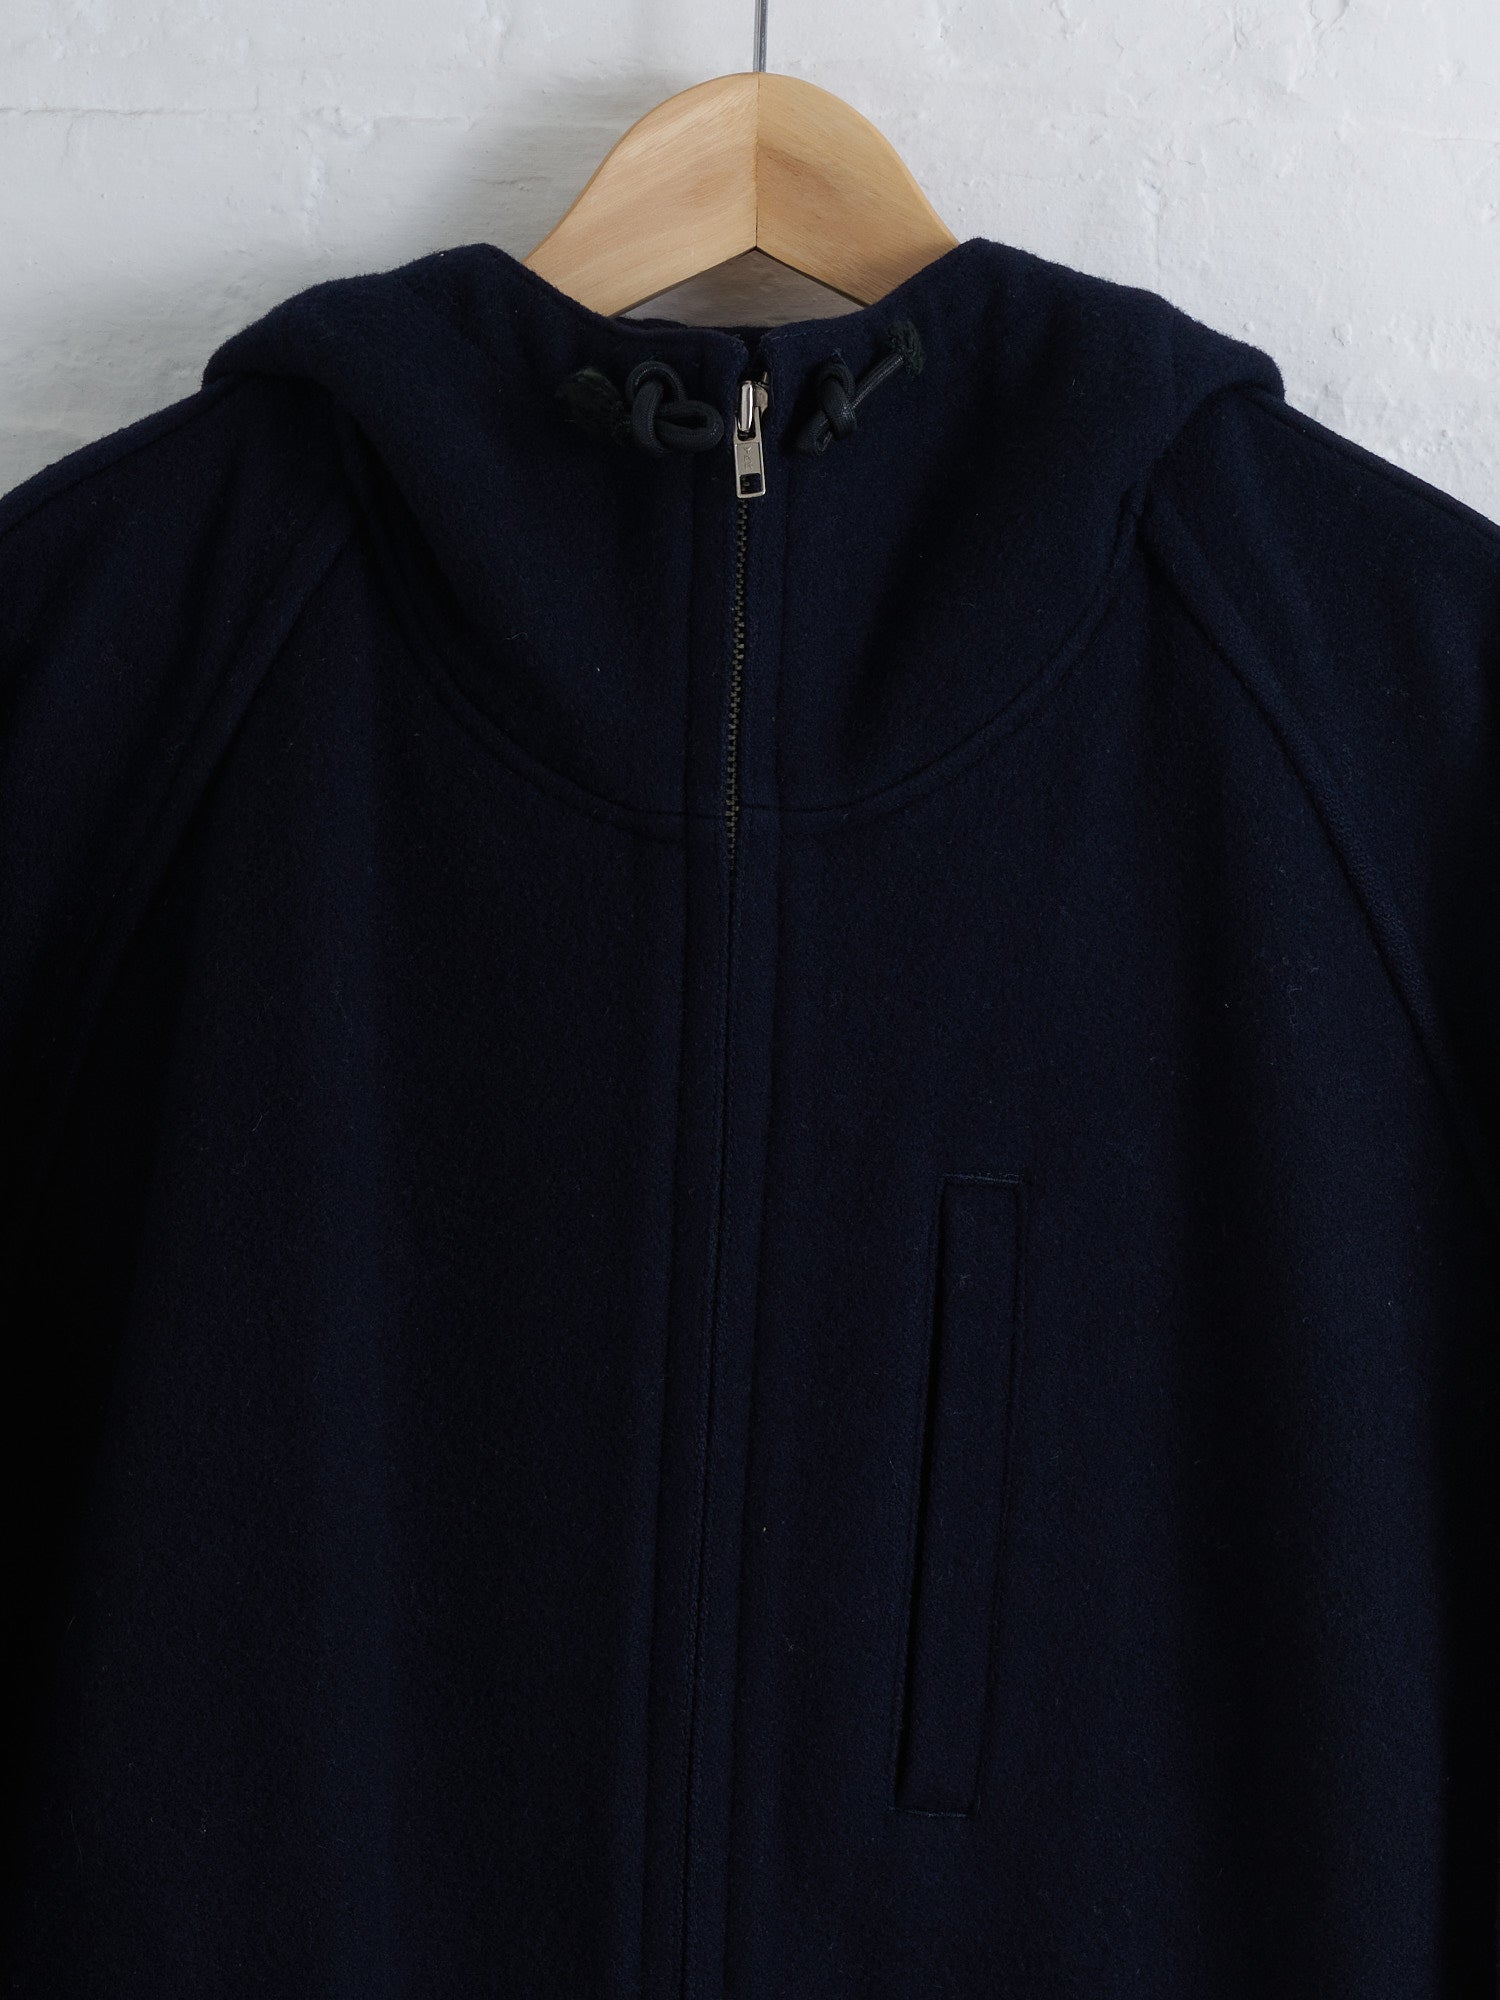 Comme des Garcons Homme 1993 dark navy wool melton hooded parka coat - M